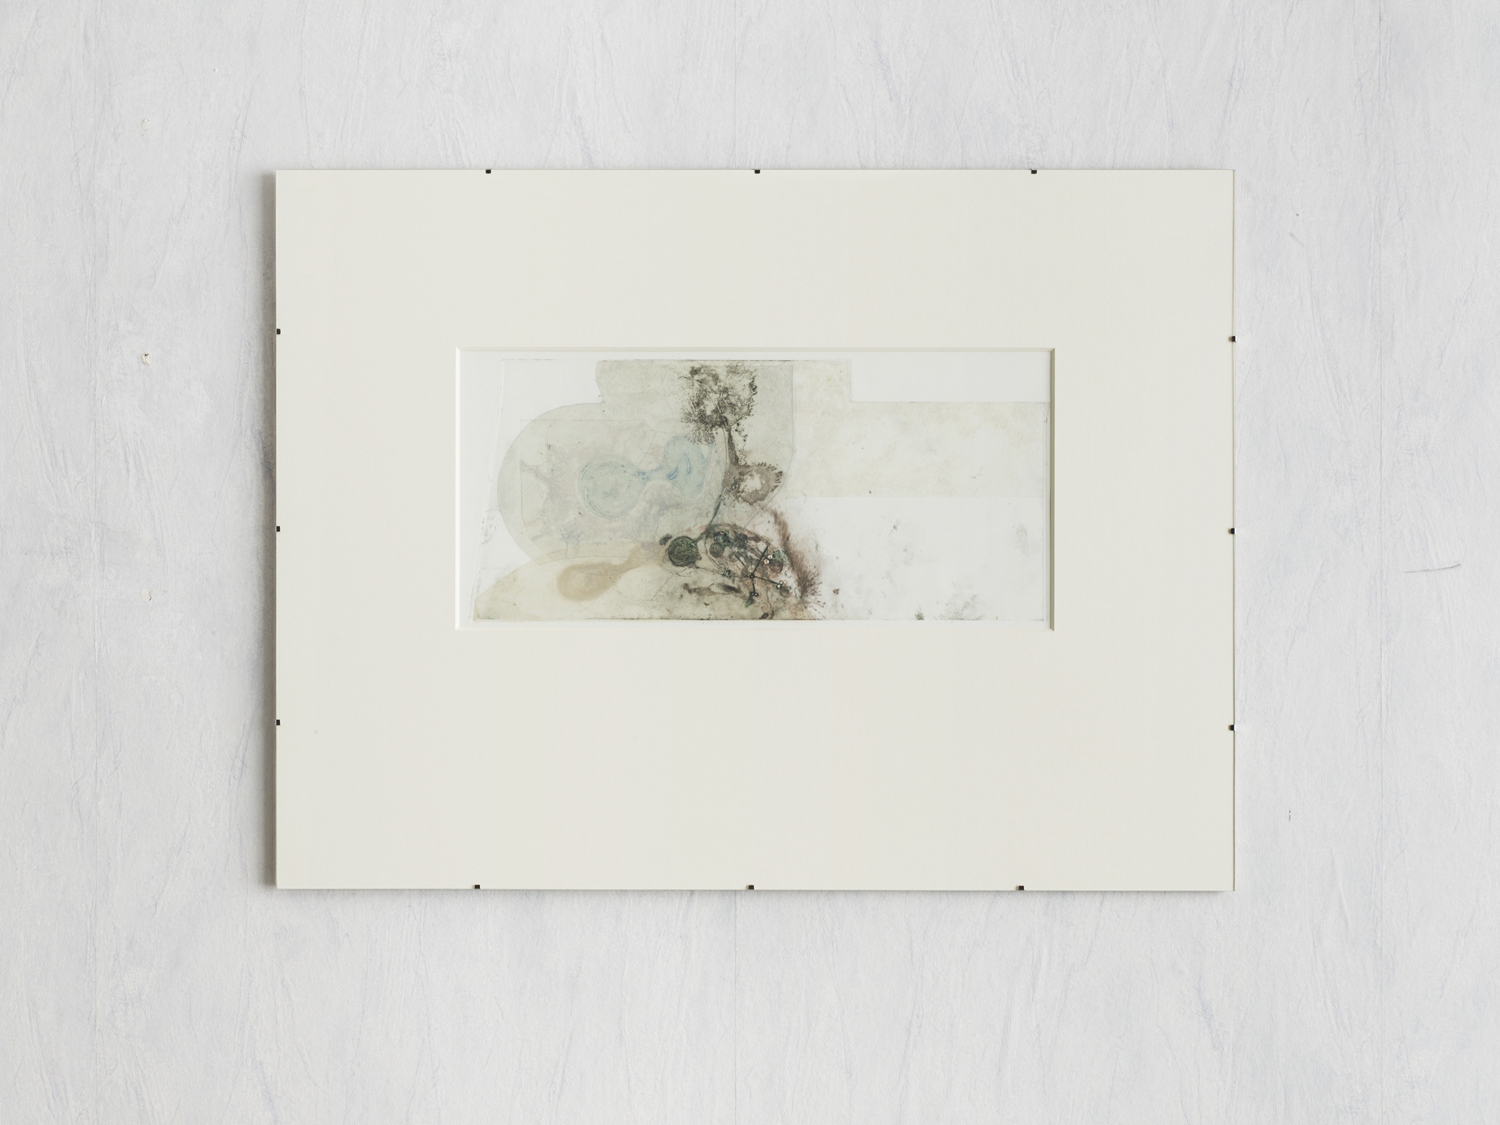 Jan Hüskes, Multinuss, 2021, multilayered gravure on paper, 60 x 80 cm (framed)